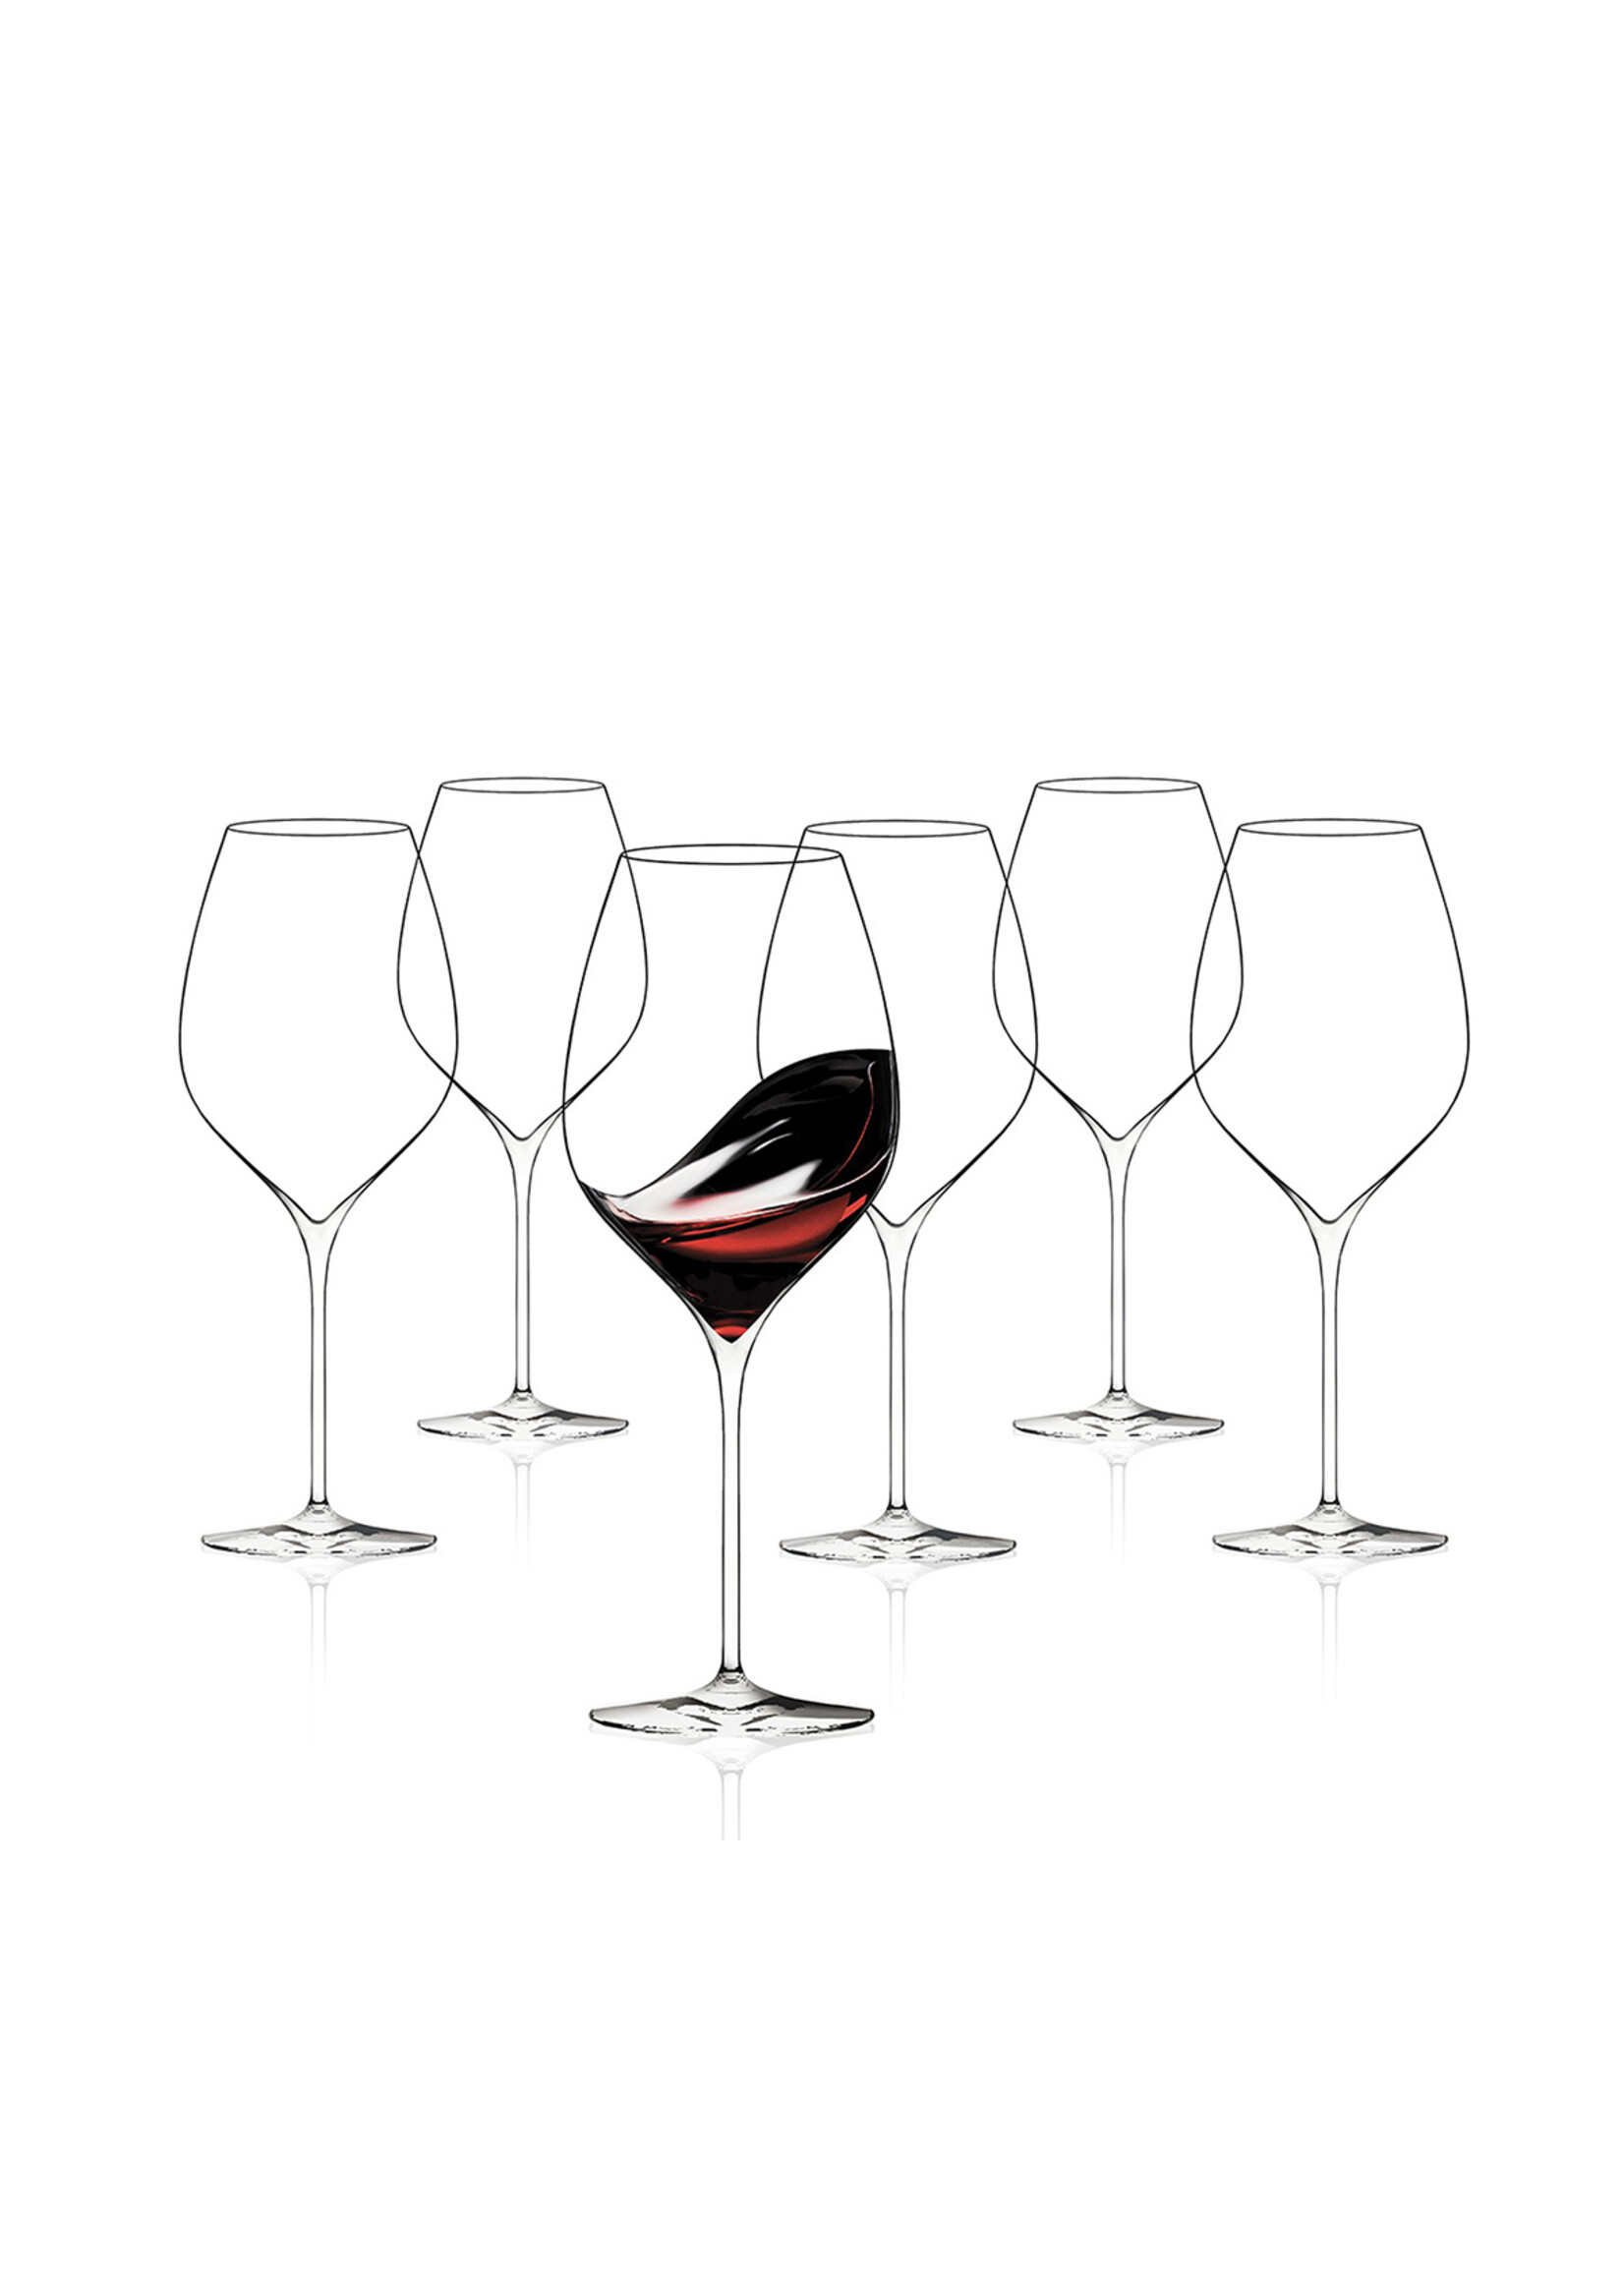 Italesse Masterclass - Wine Glass - 72 cl - 6 pcs.